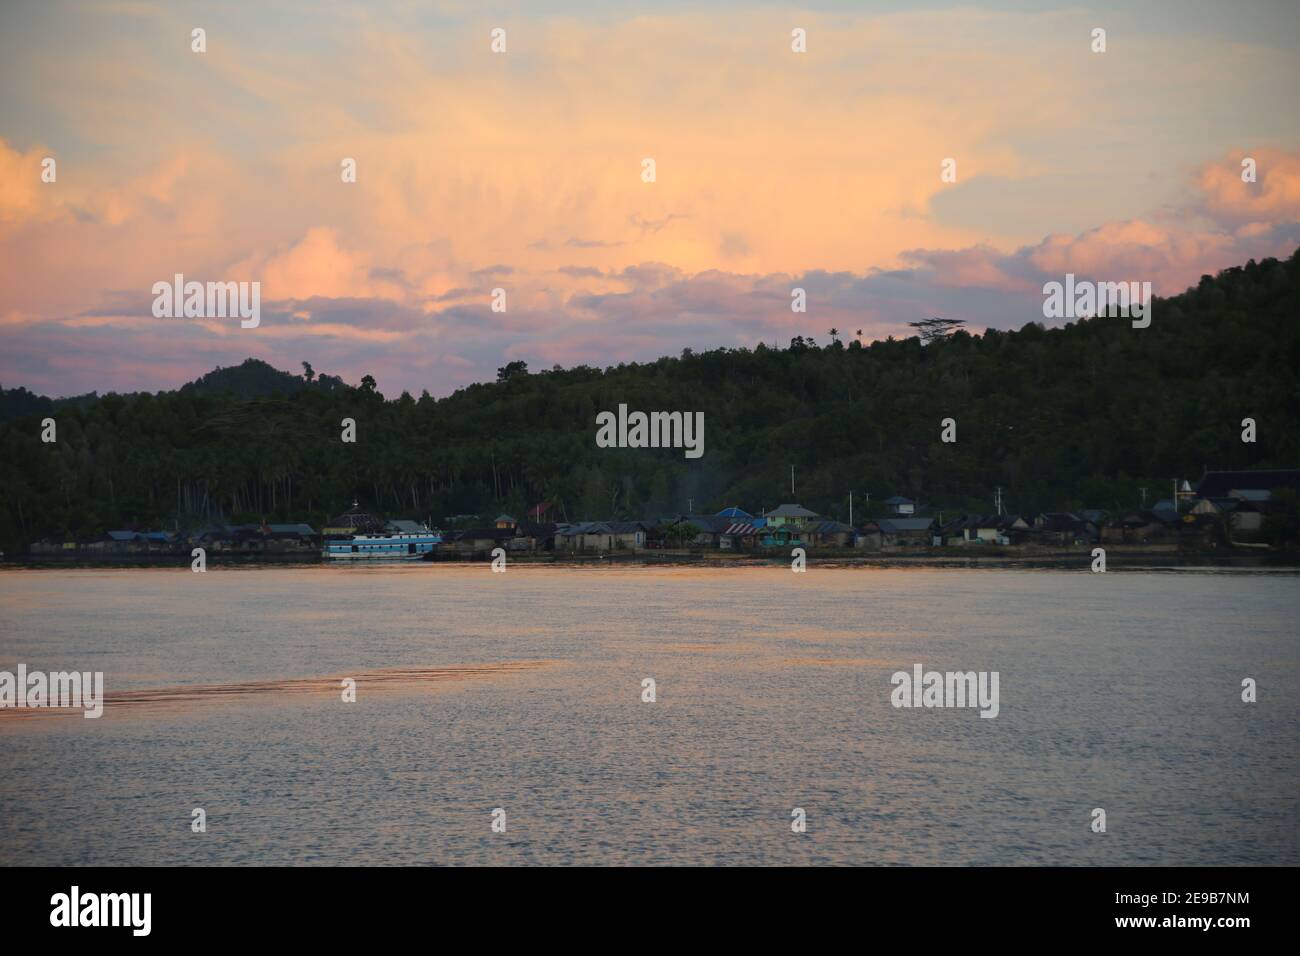 Sonnenaufgang an der Molukken-Insel Lata, Nordmolukken, Halmahera, Indonésie Banque D'Images